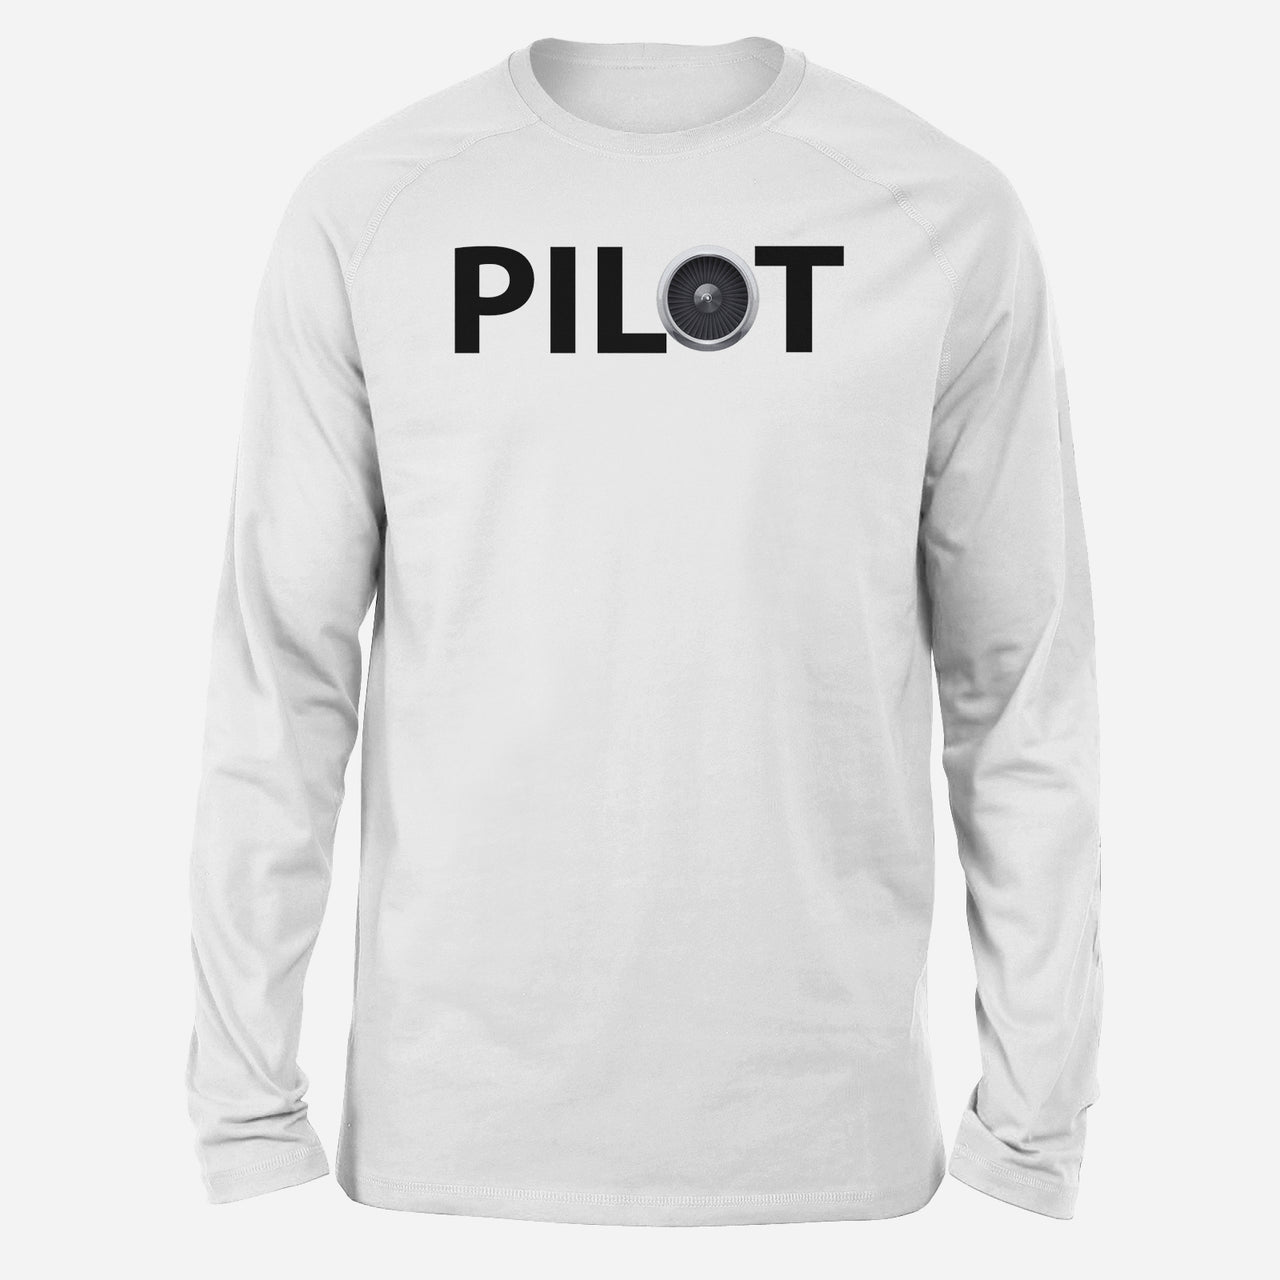 Pilot & Jet Engine Designed Long-Sleeve T-Shirts